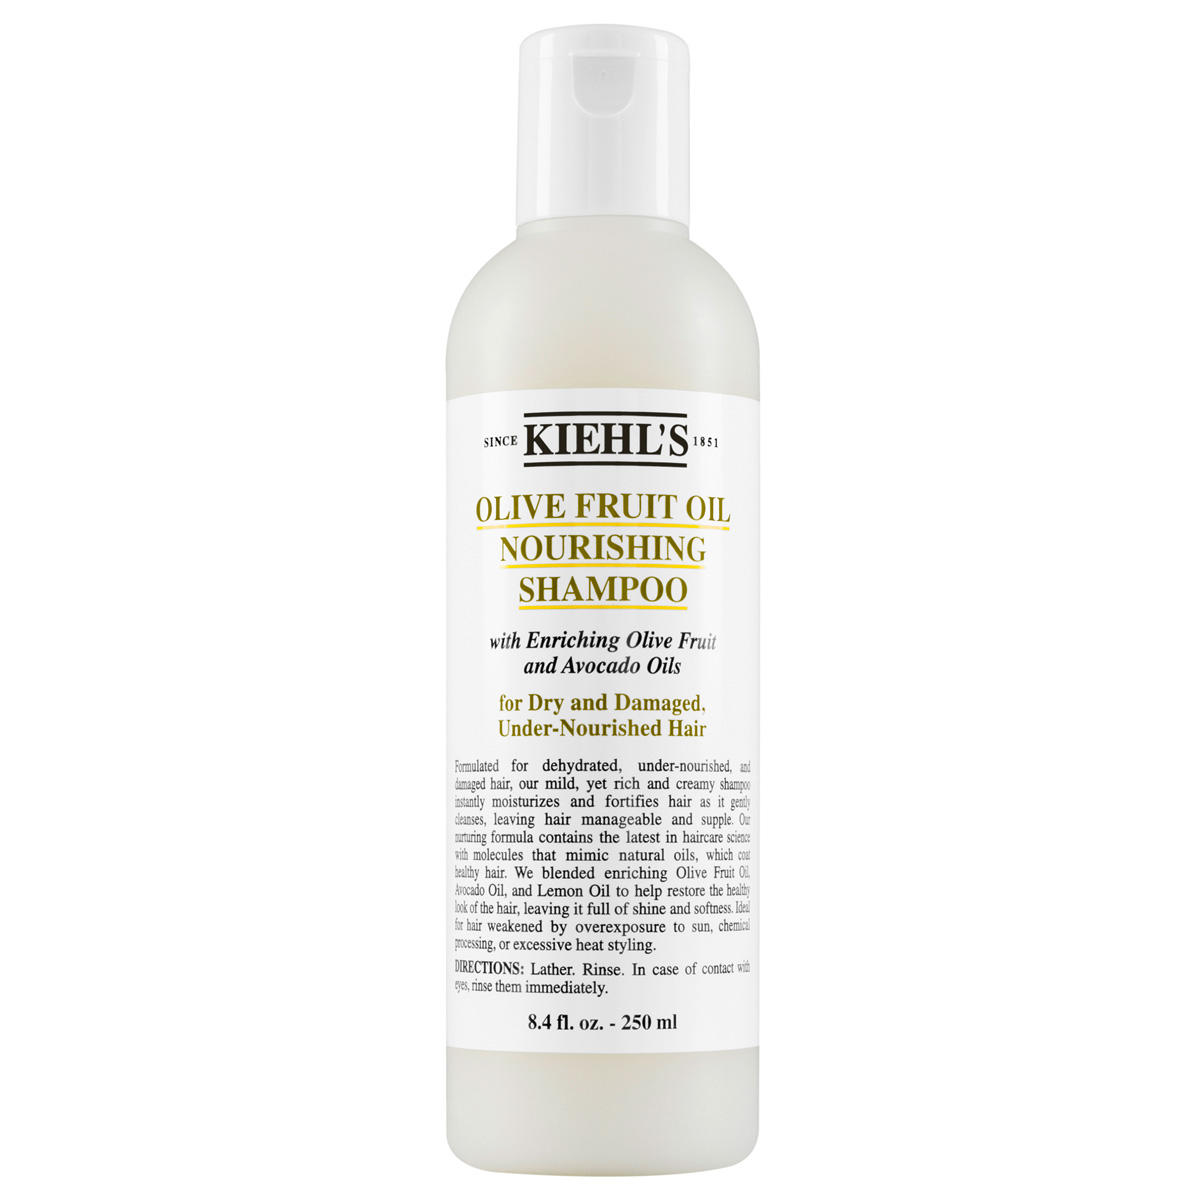 Kiehl's Olive Fruit Oil Nourishing Shampoo 250 ml - 1